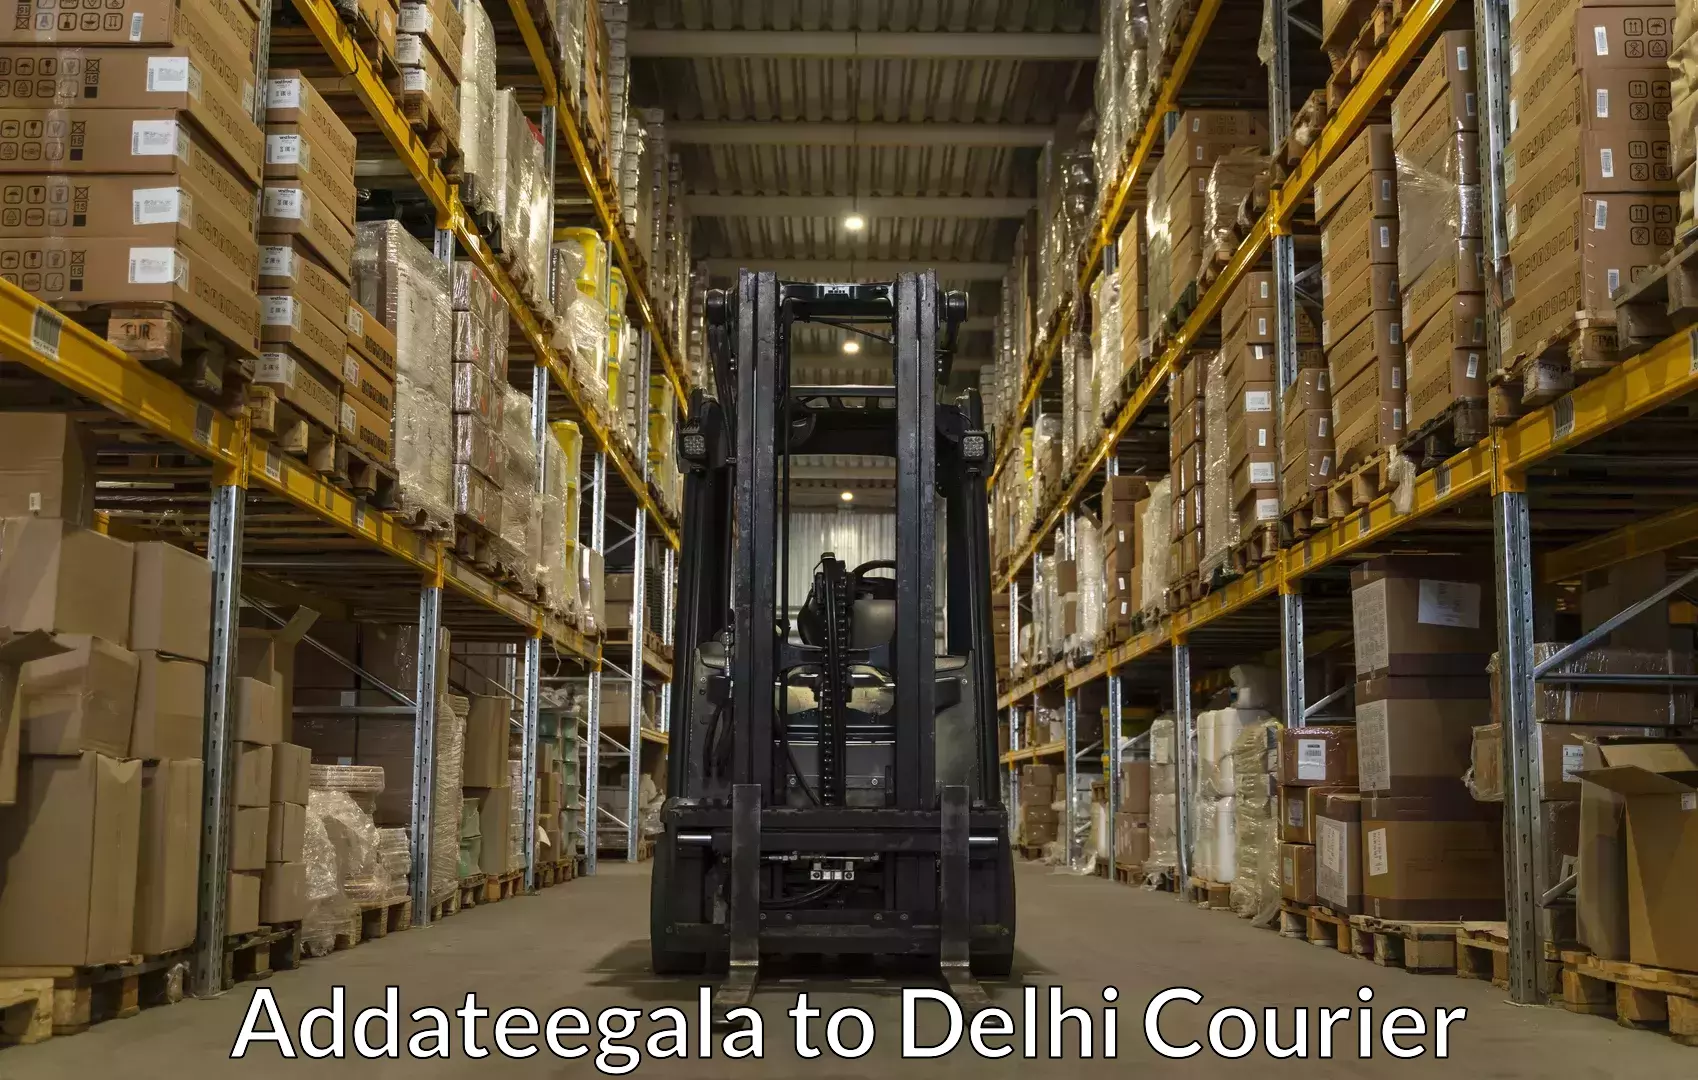 Professional moving company Addateegala to University of Delhi